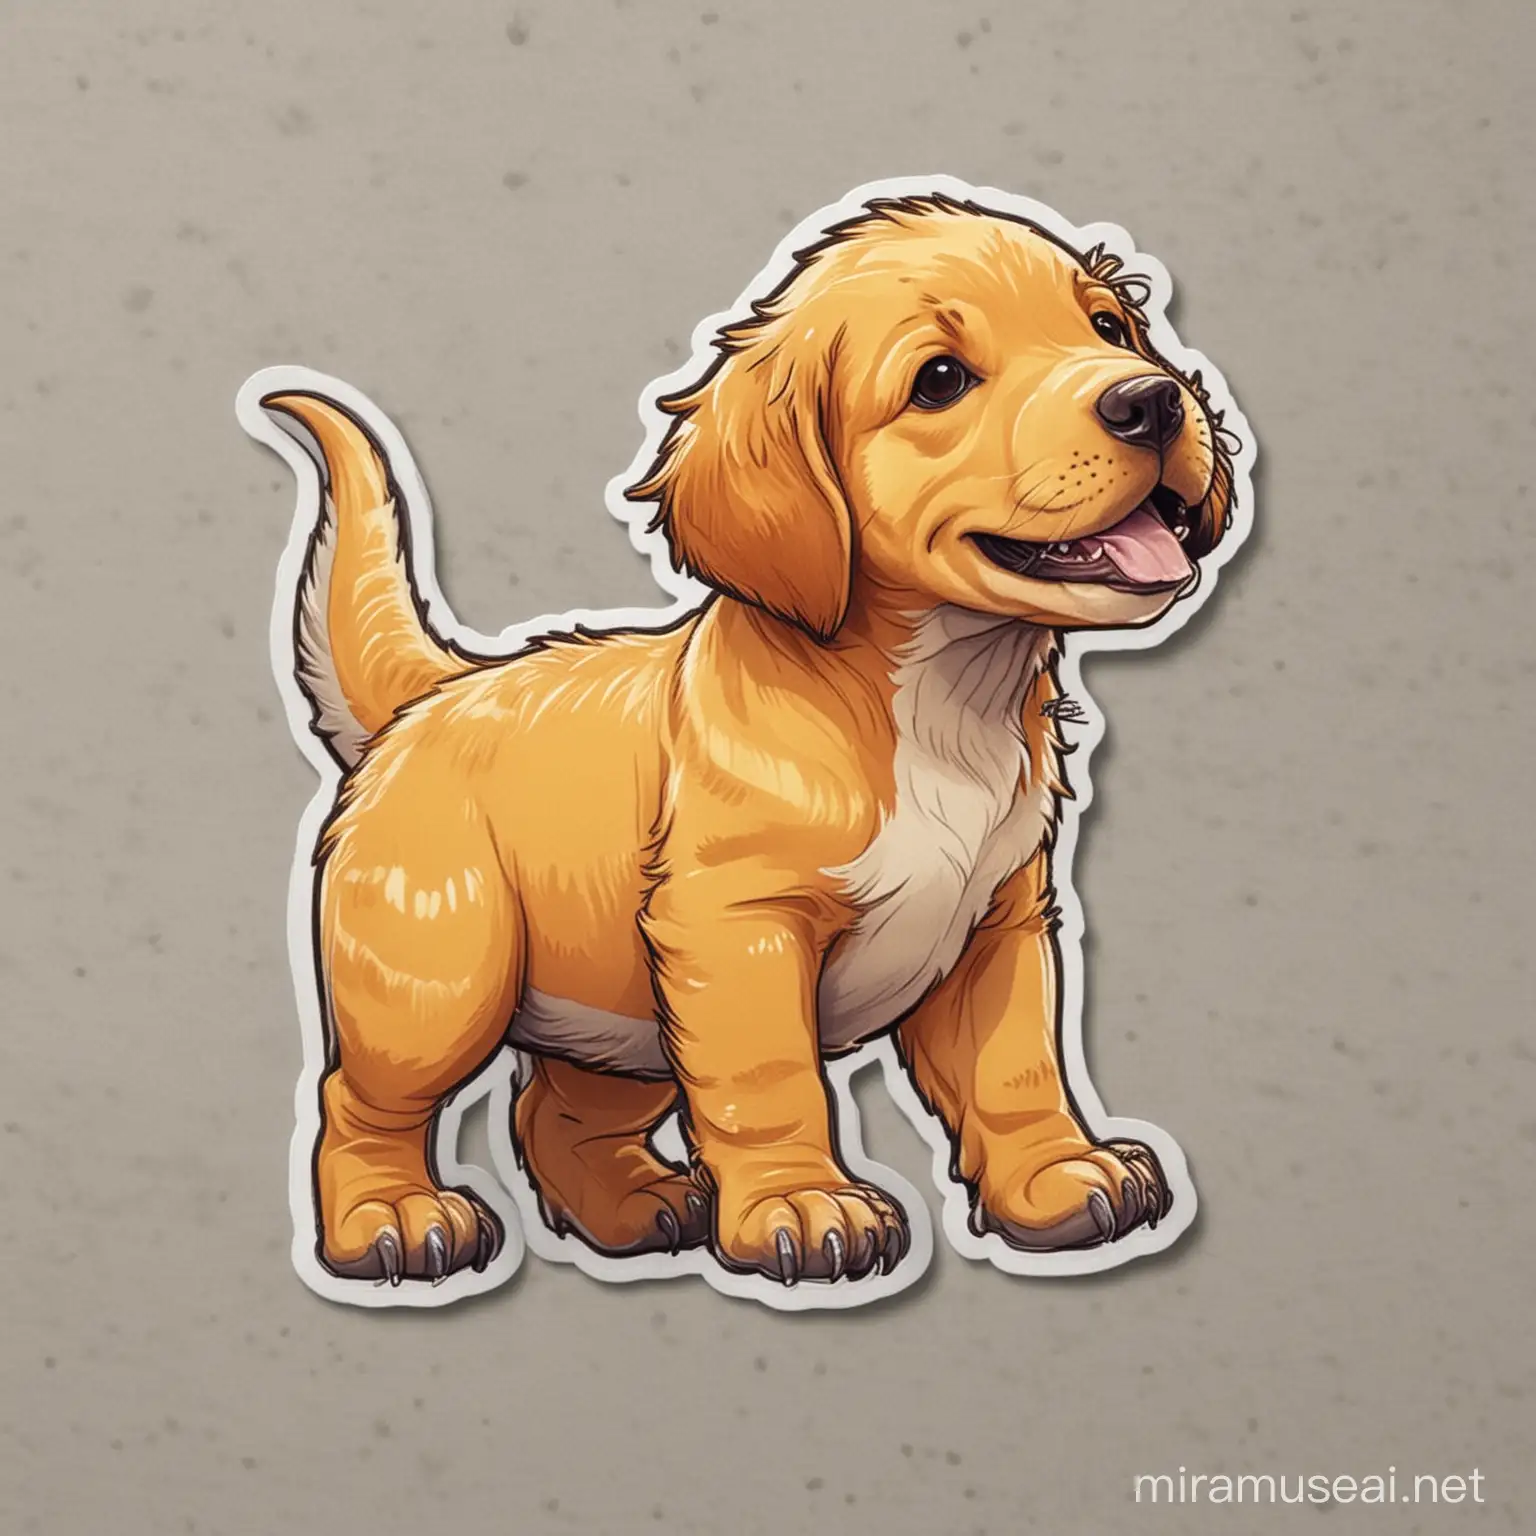 Adorable Baby TRex Golden Retriever Puppy Sticker Art